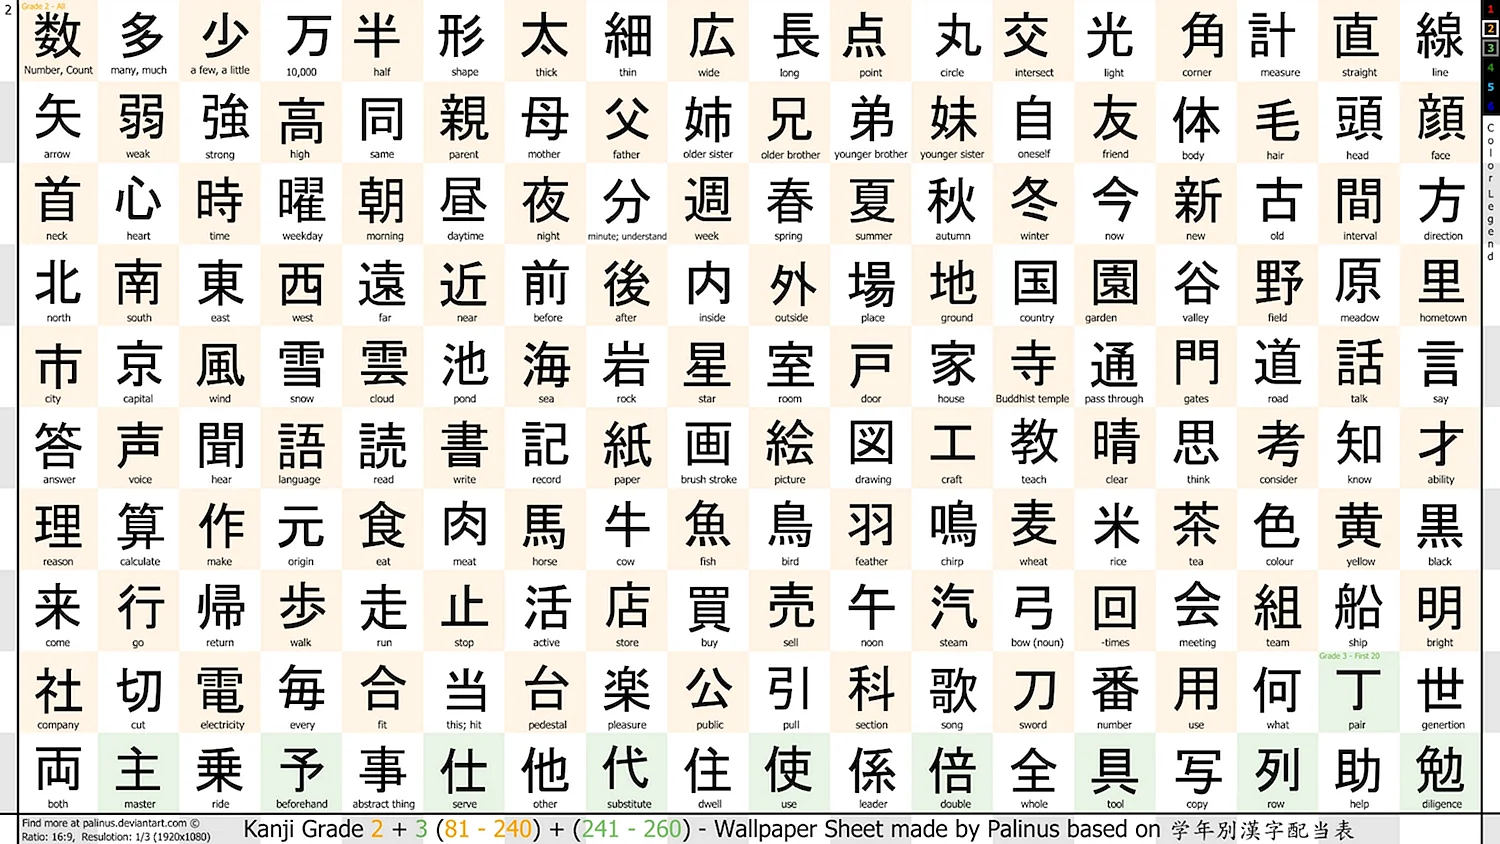 Таблица японских иероглифов кандзи